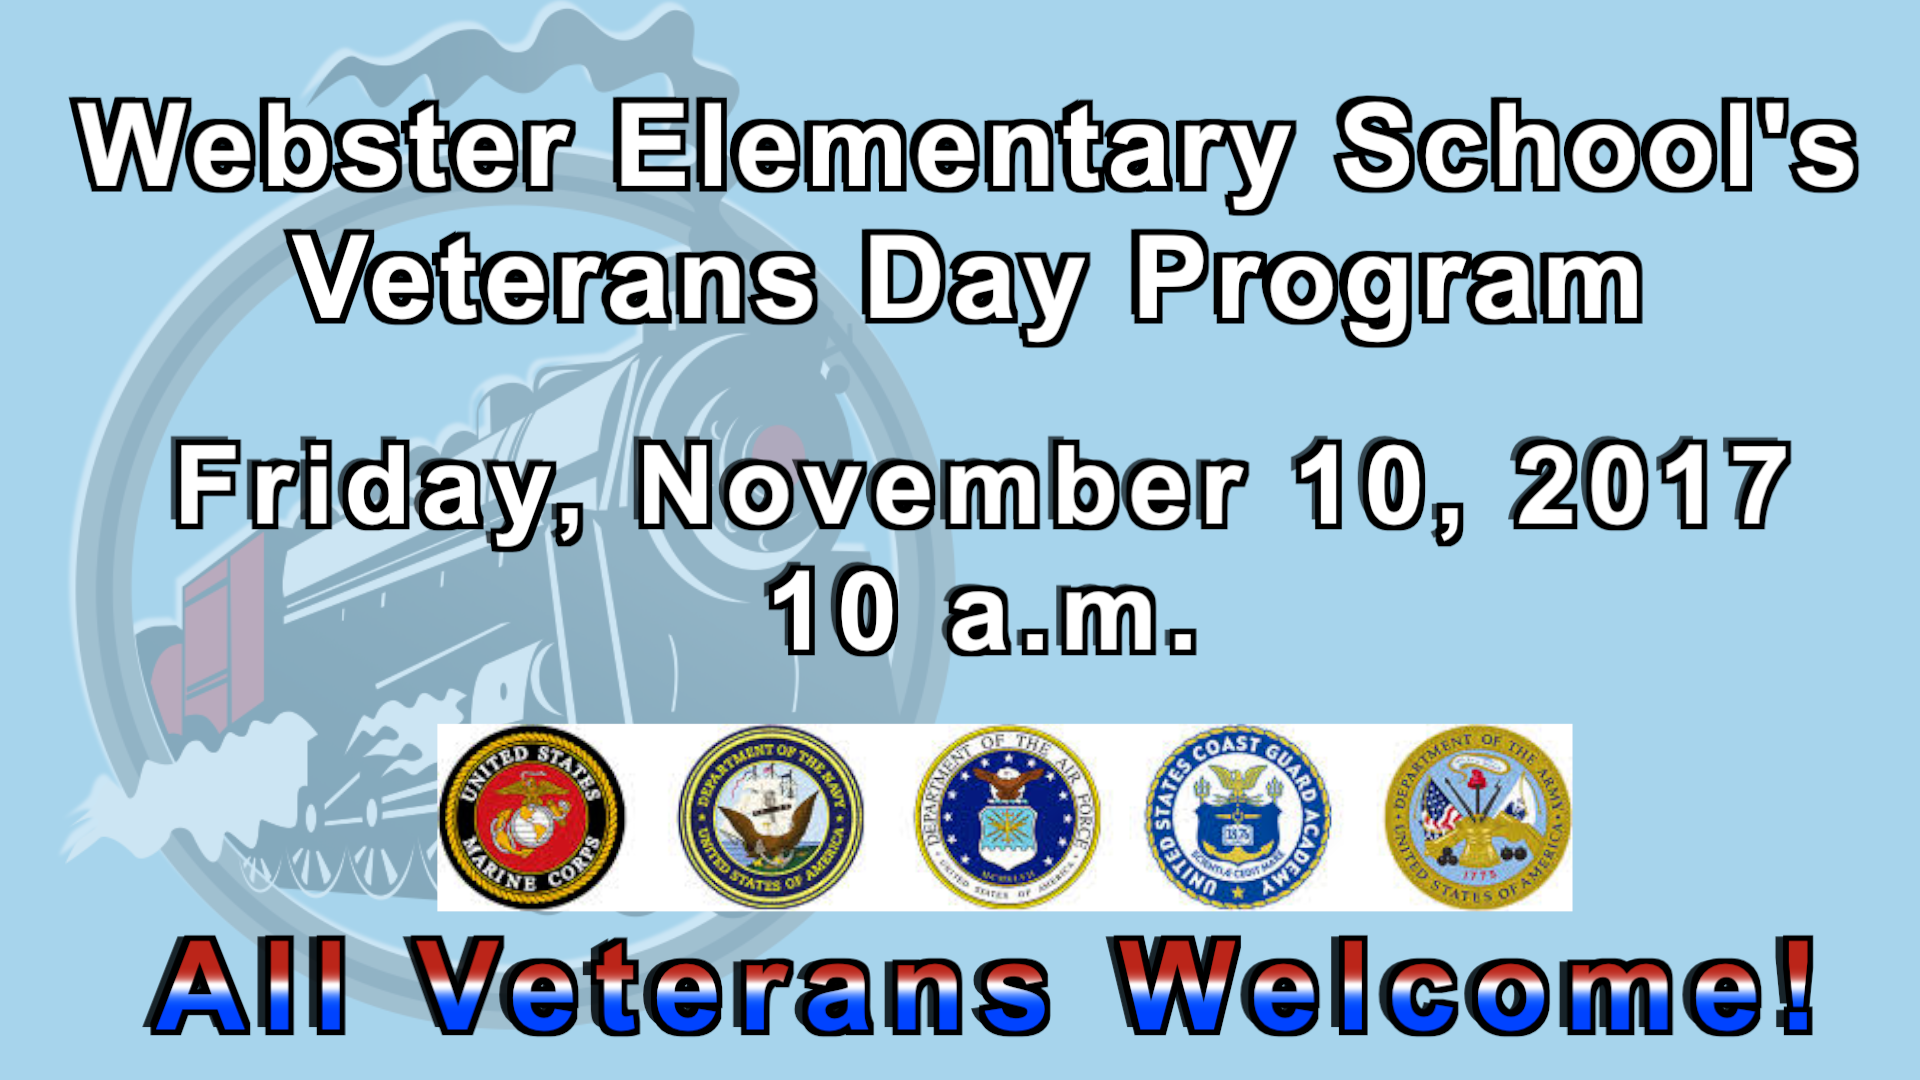 Webster's Veterans Day Program on November 10, 2017 at 10 a.m.